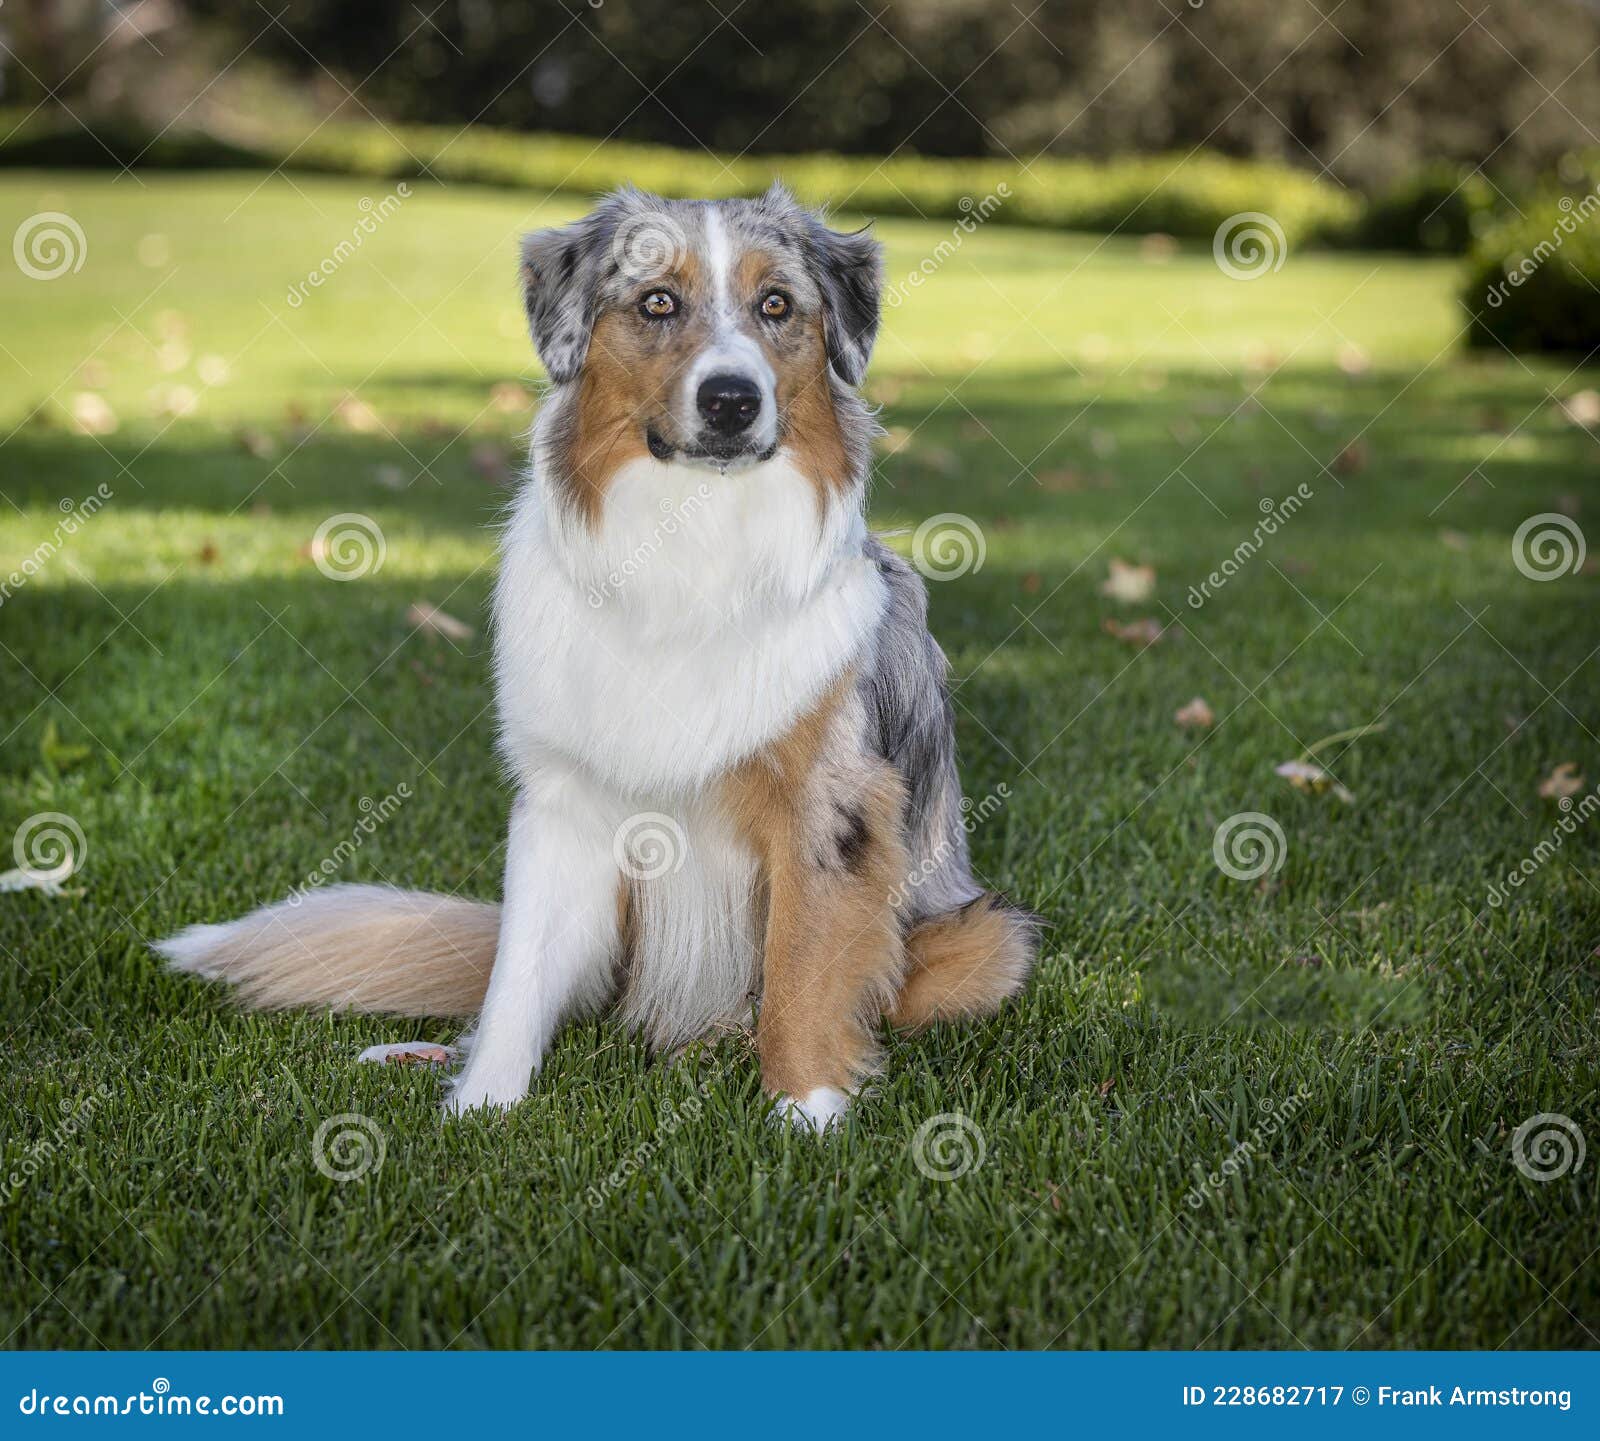 Australian Shepherd Posing for a Portrait at a Park Stock Image - Image ...